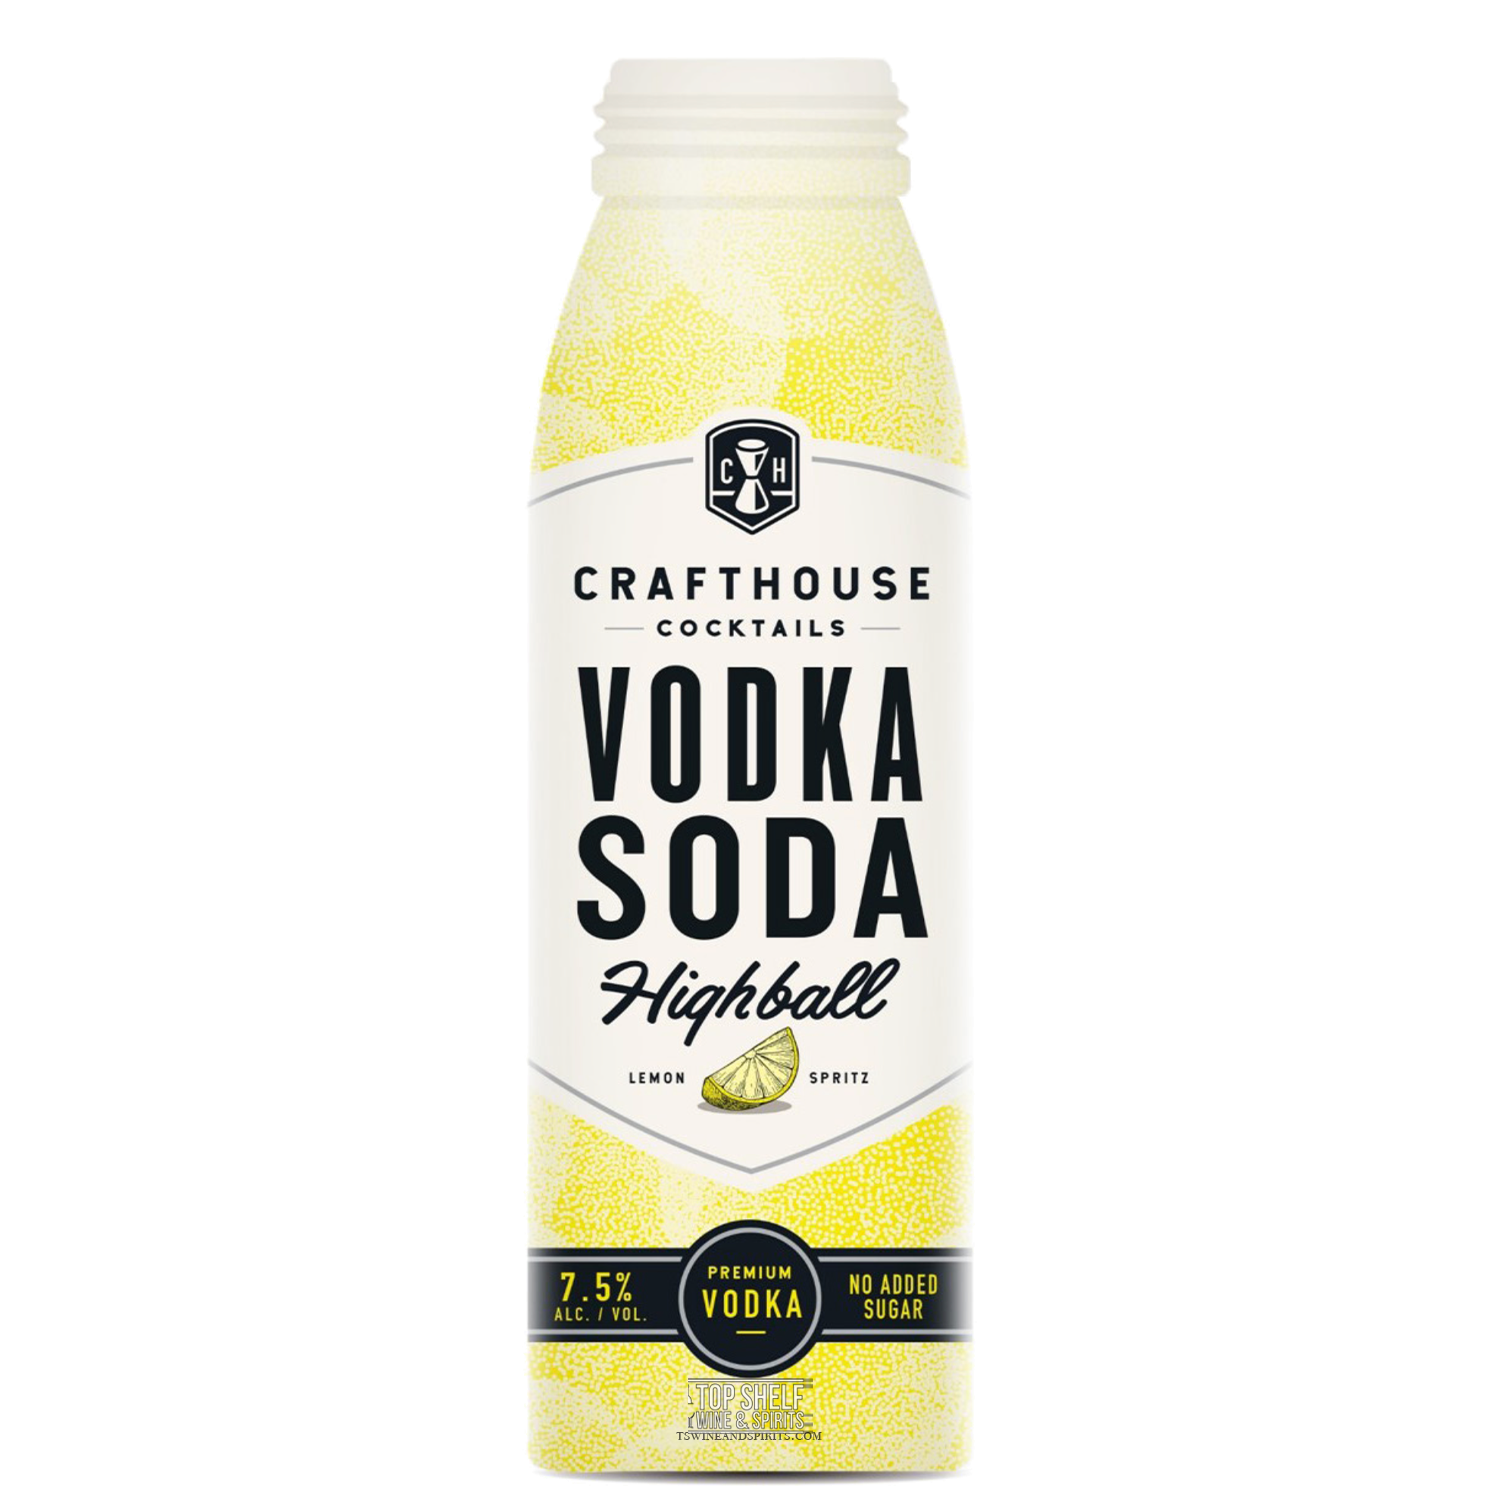 Crafthouse cocktails Vodka Soda 355ml